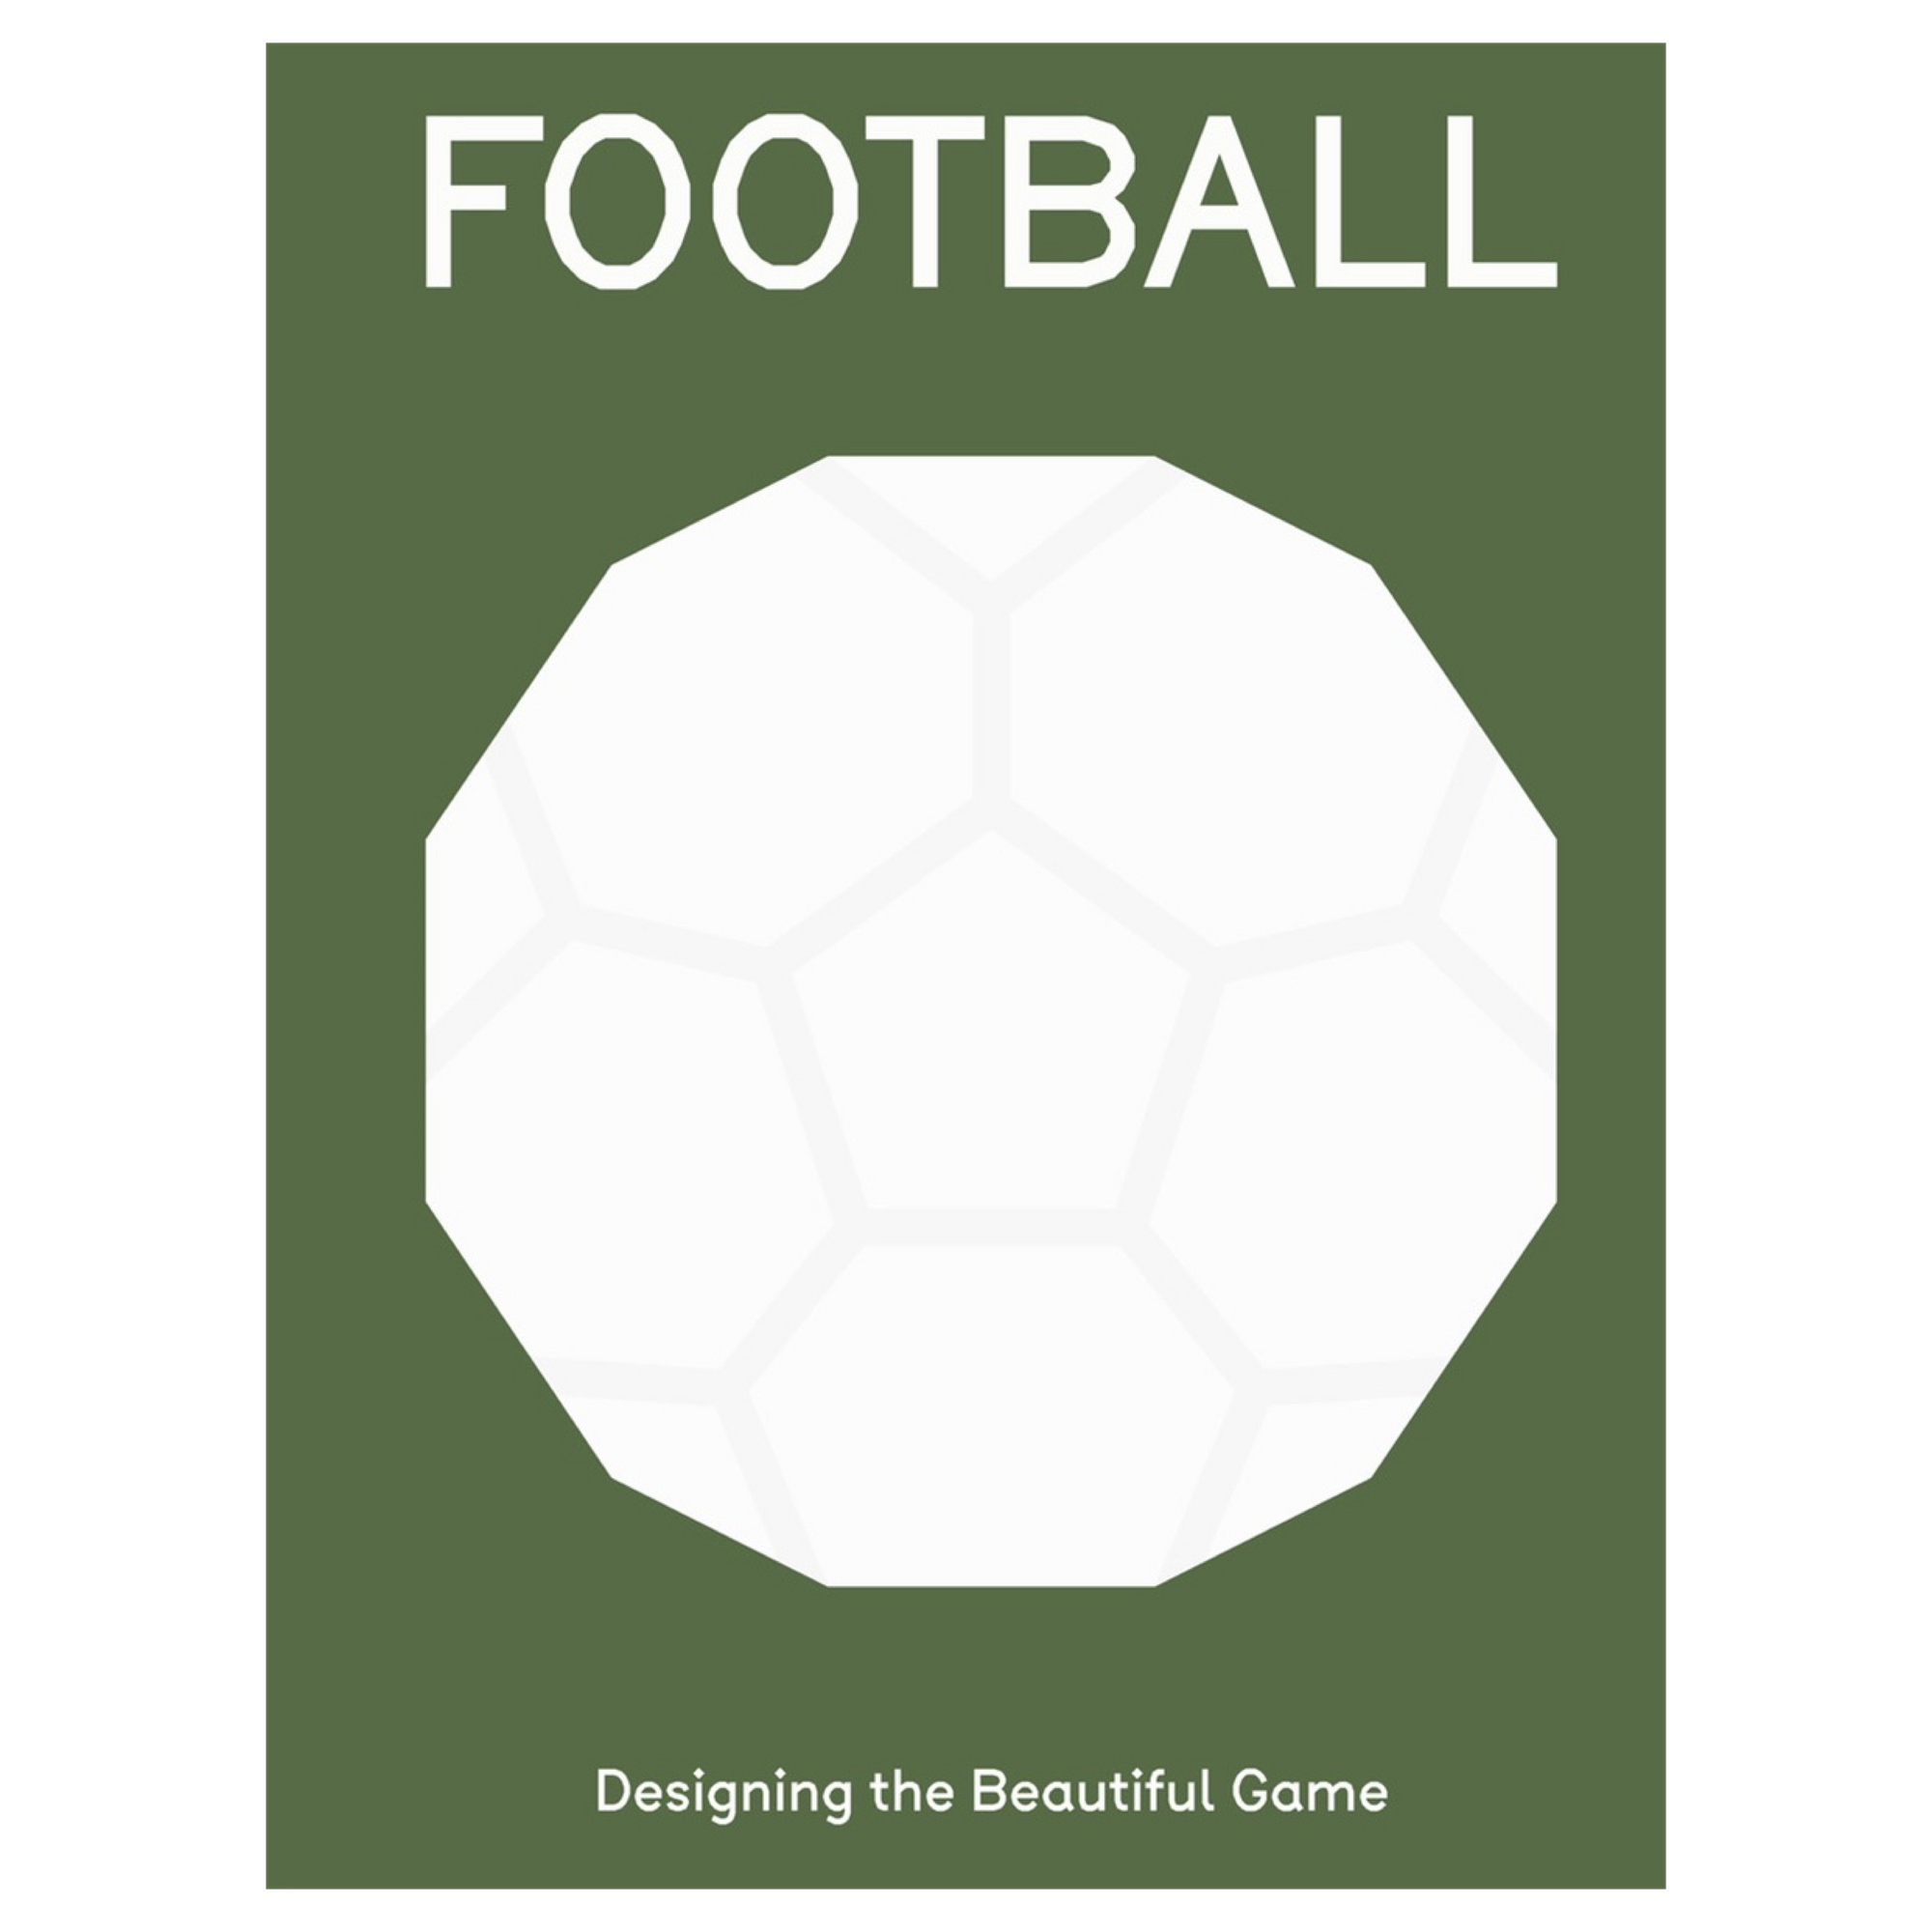 FOOTBALL: Designing the Beautiful Game